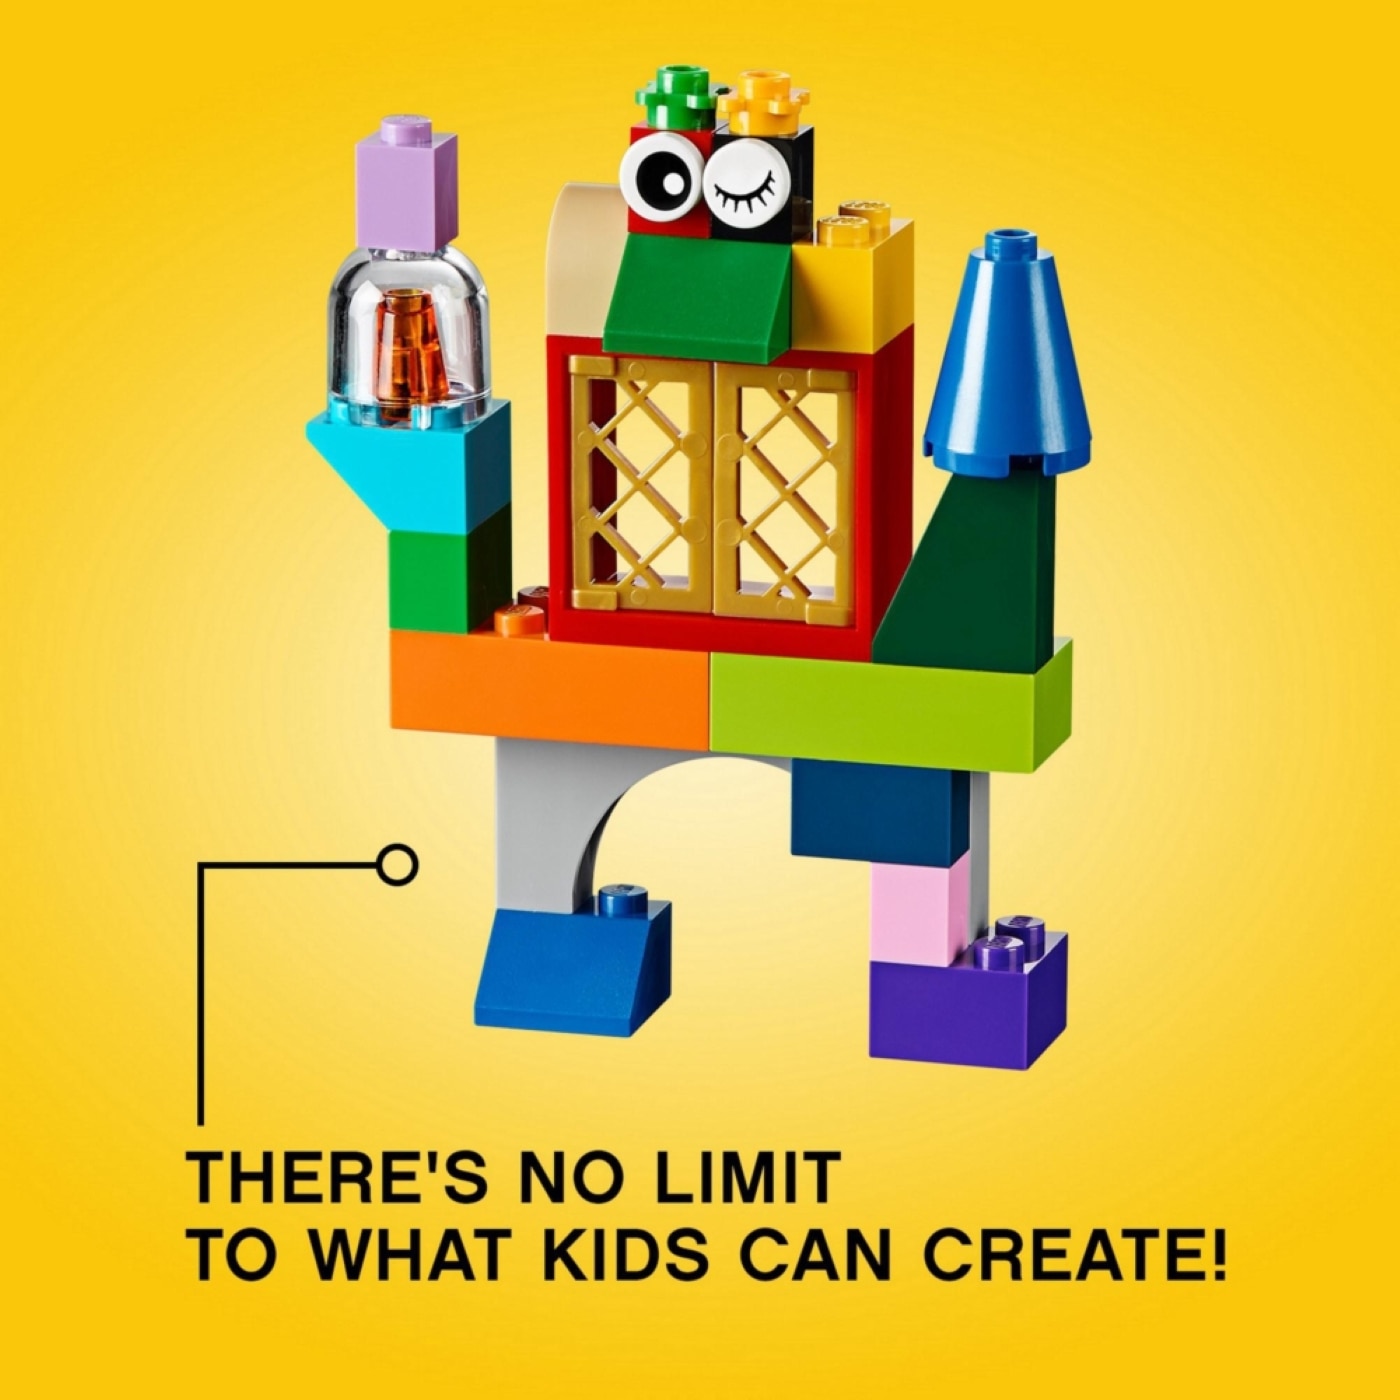 LEGO 經典系列 大型創意拼砌桶，培養 3D 空間概念，激發想像力、發揮創意，積木堆疊、組合，強化手、眼、腦協調能力。